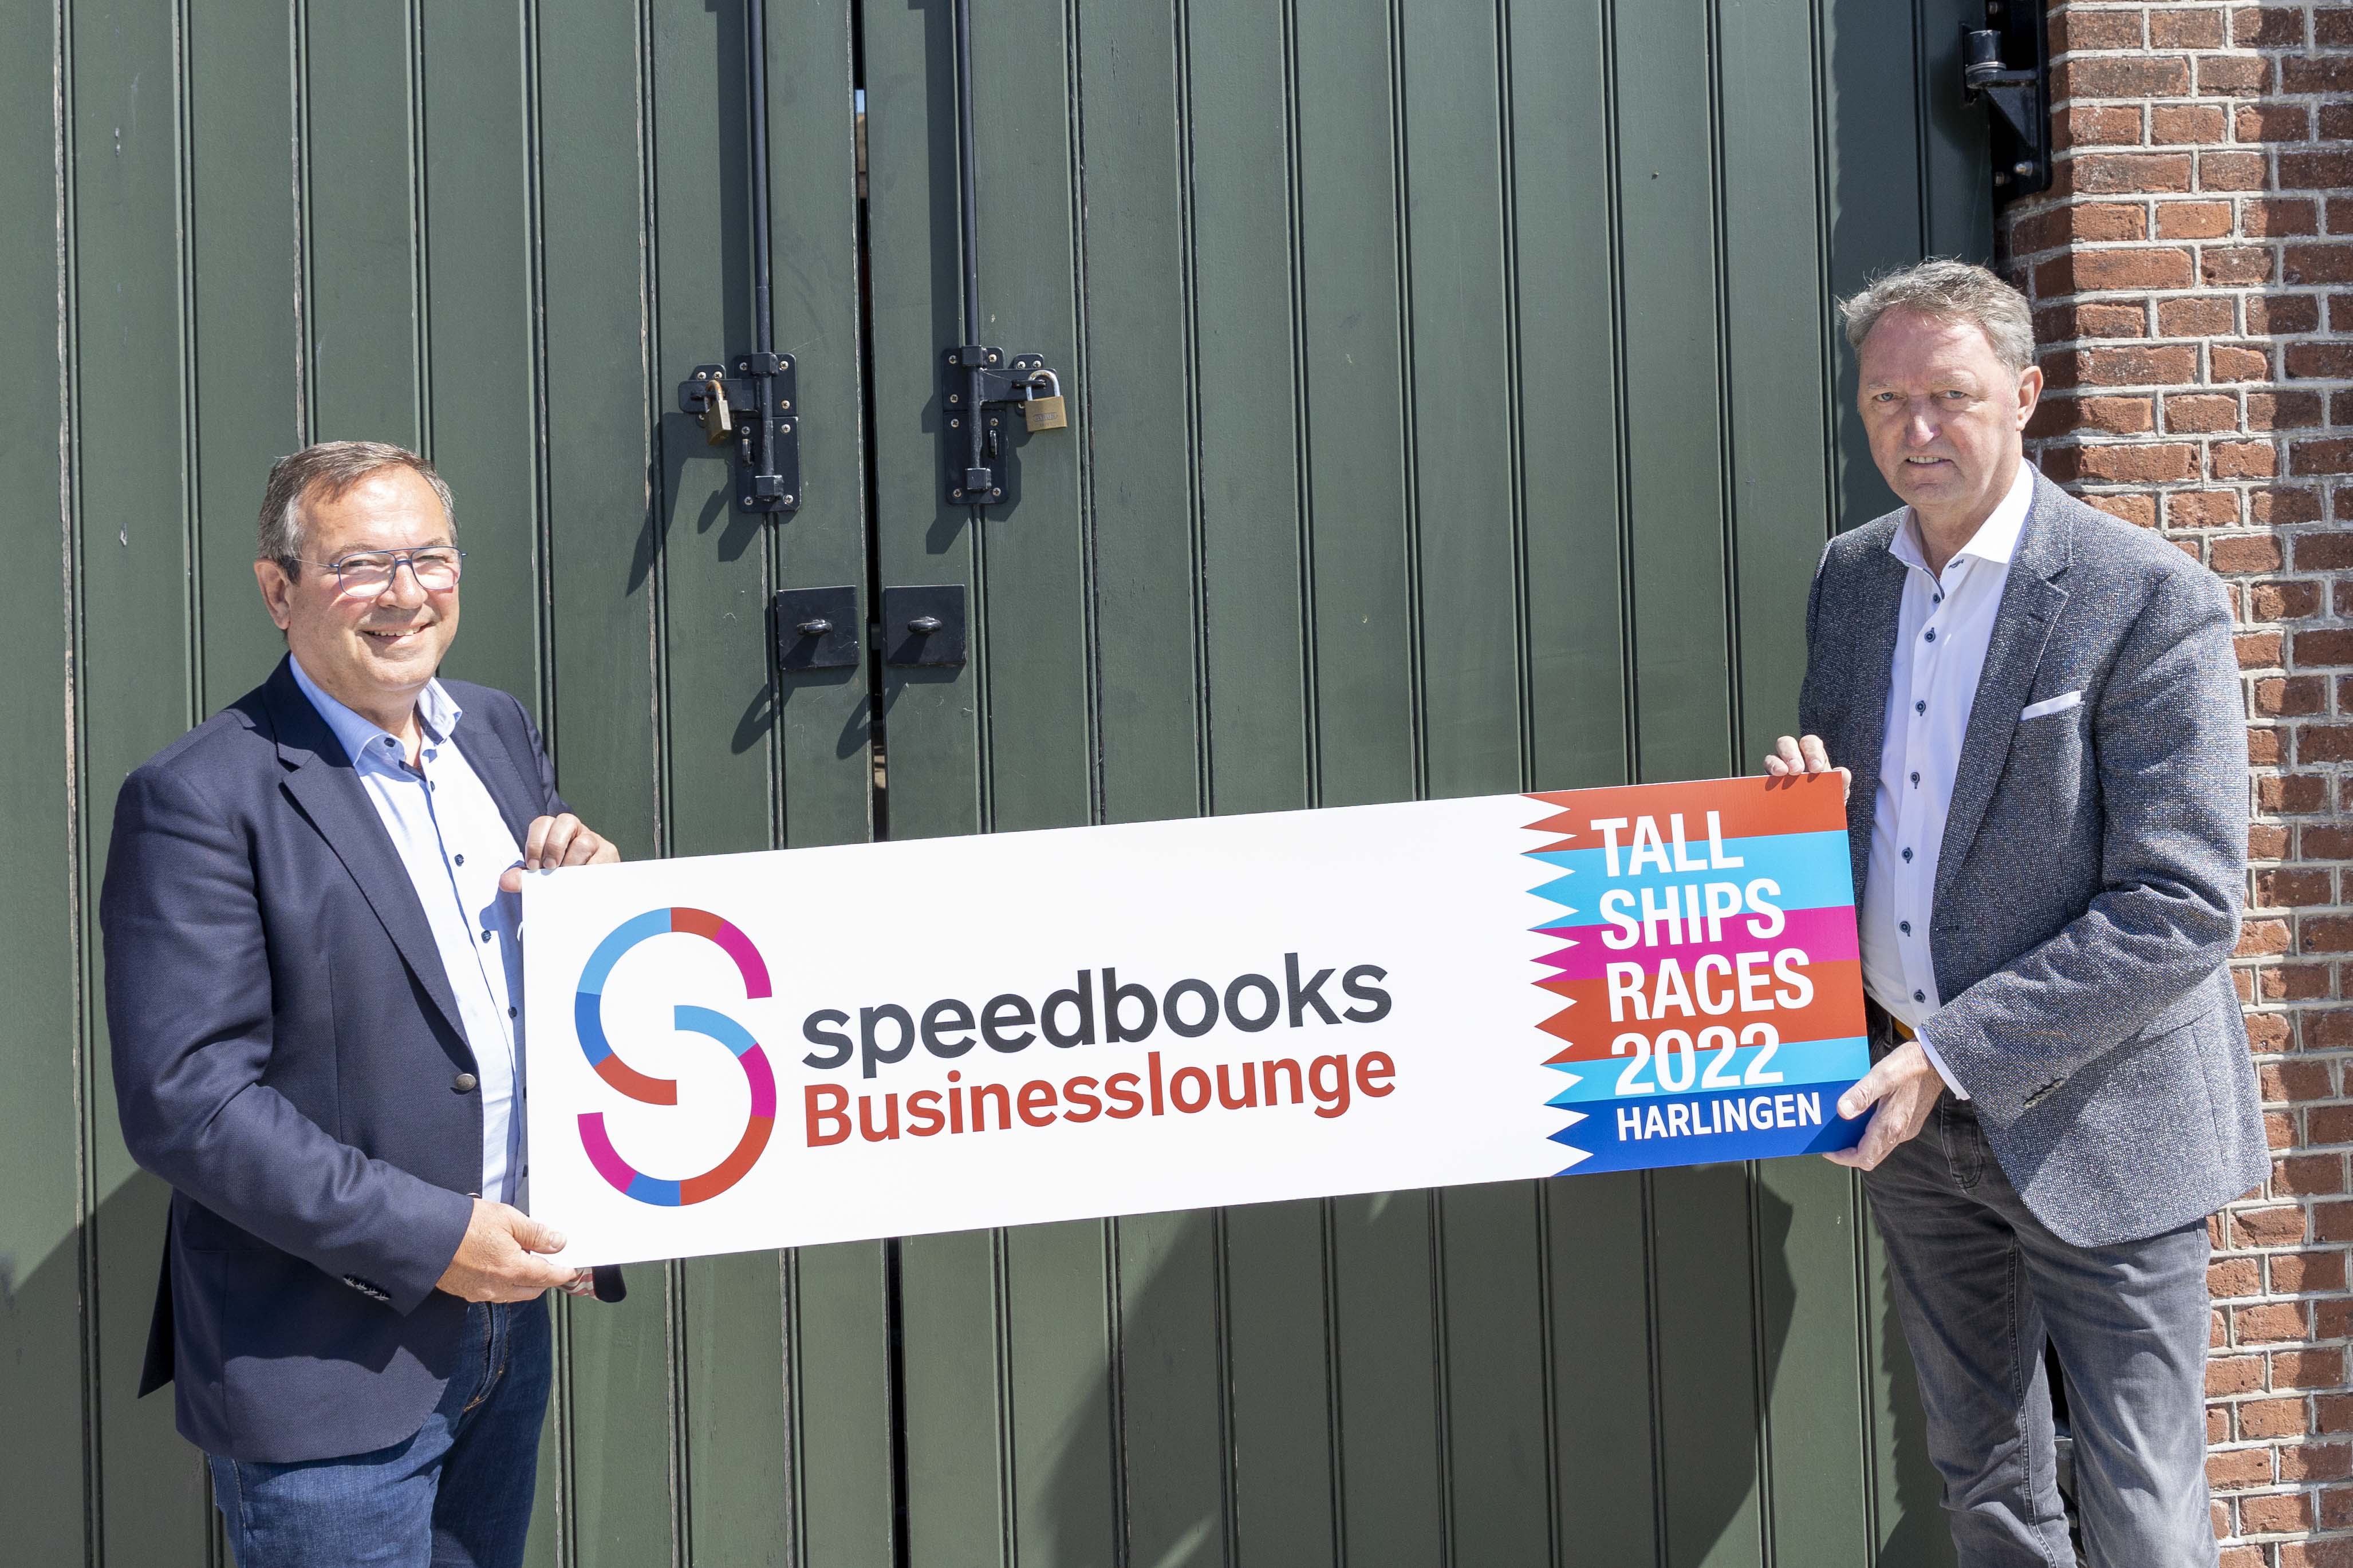 Speedbooks trotse sponsor van de Tall Ships Races Harlingen